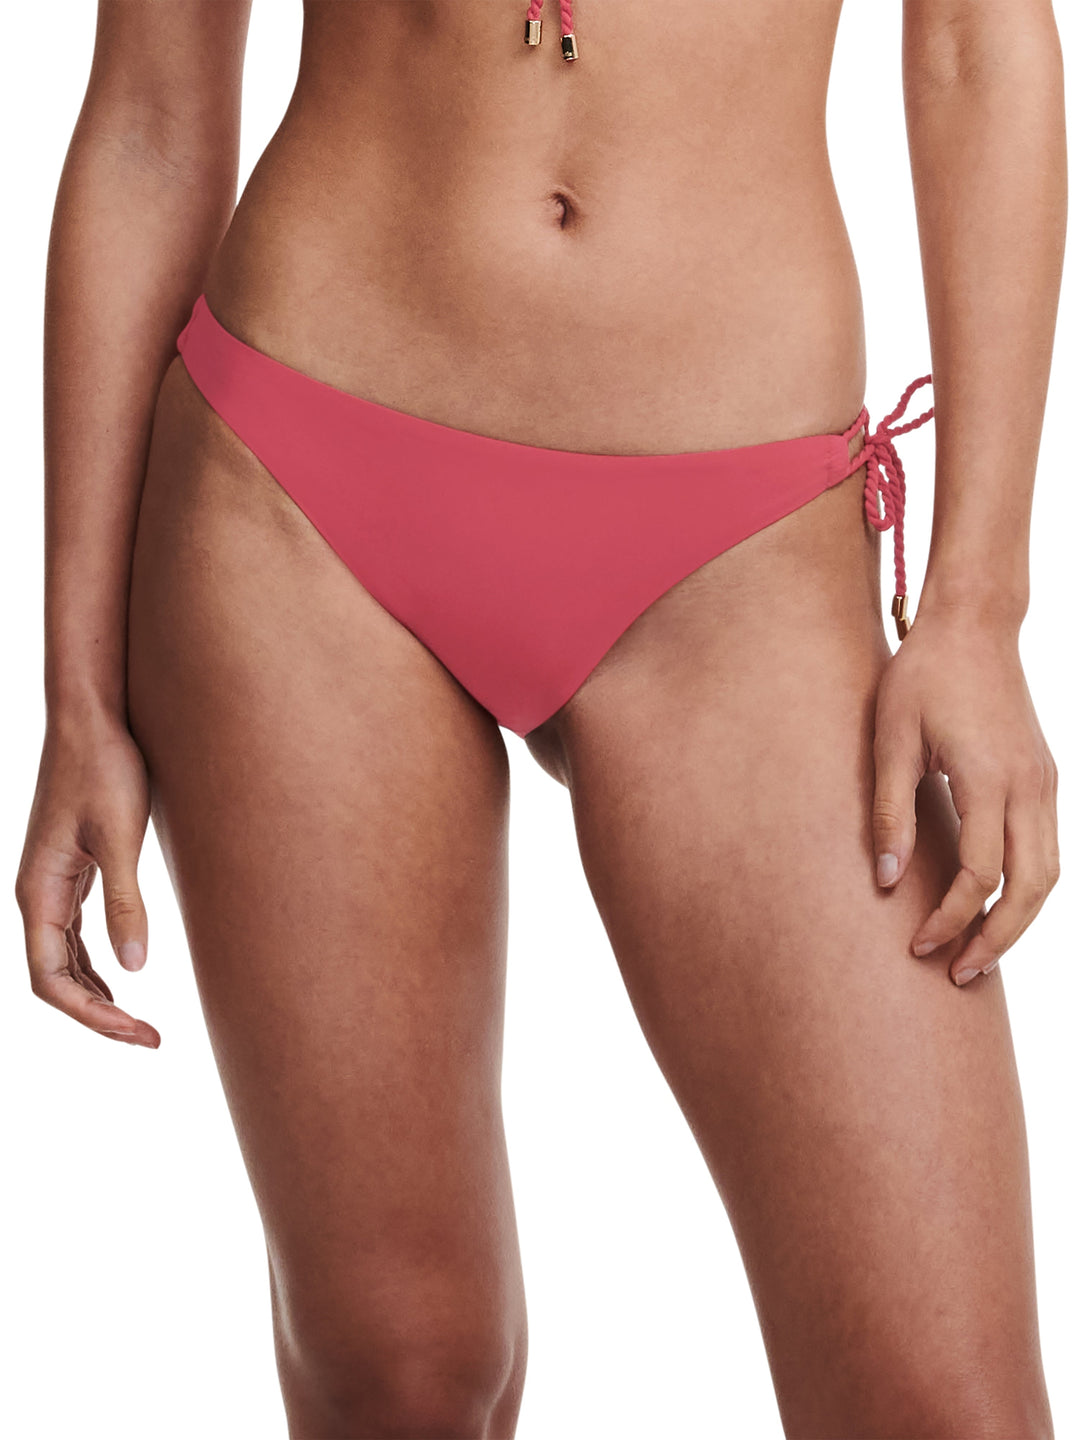 Chantelle Swimwear Inspire Bikini - Гранатово-красное бикини с полной чашкой Chantelle